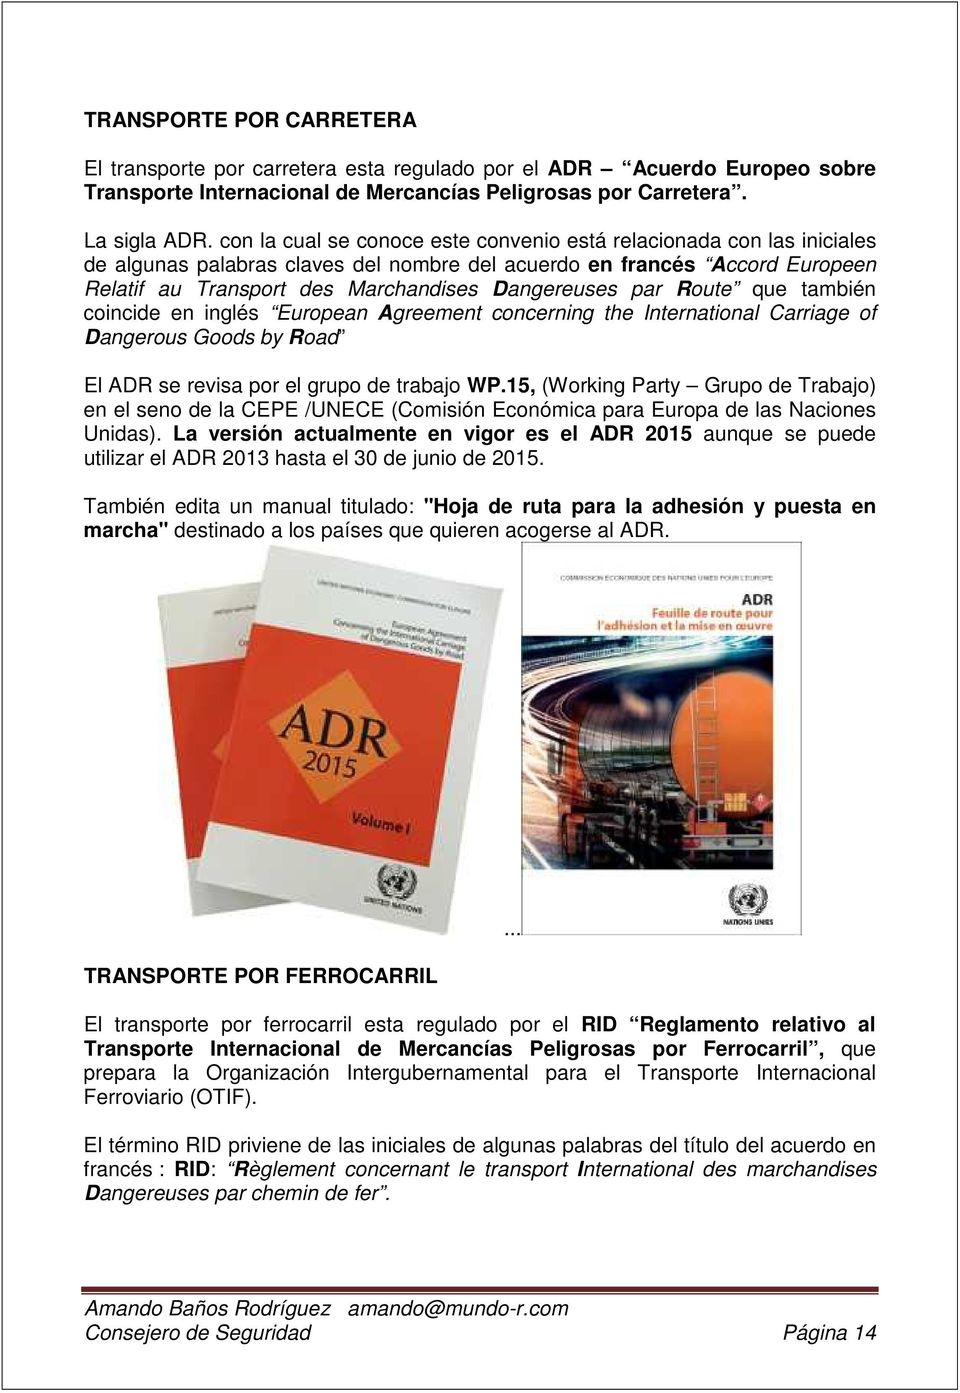 par Route que también coincide en inglés European Agreement concerning the International Carriage of Dangerous Goods by Road El ADR se revisa por el grupo de trabajo WP.